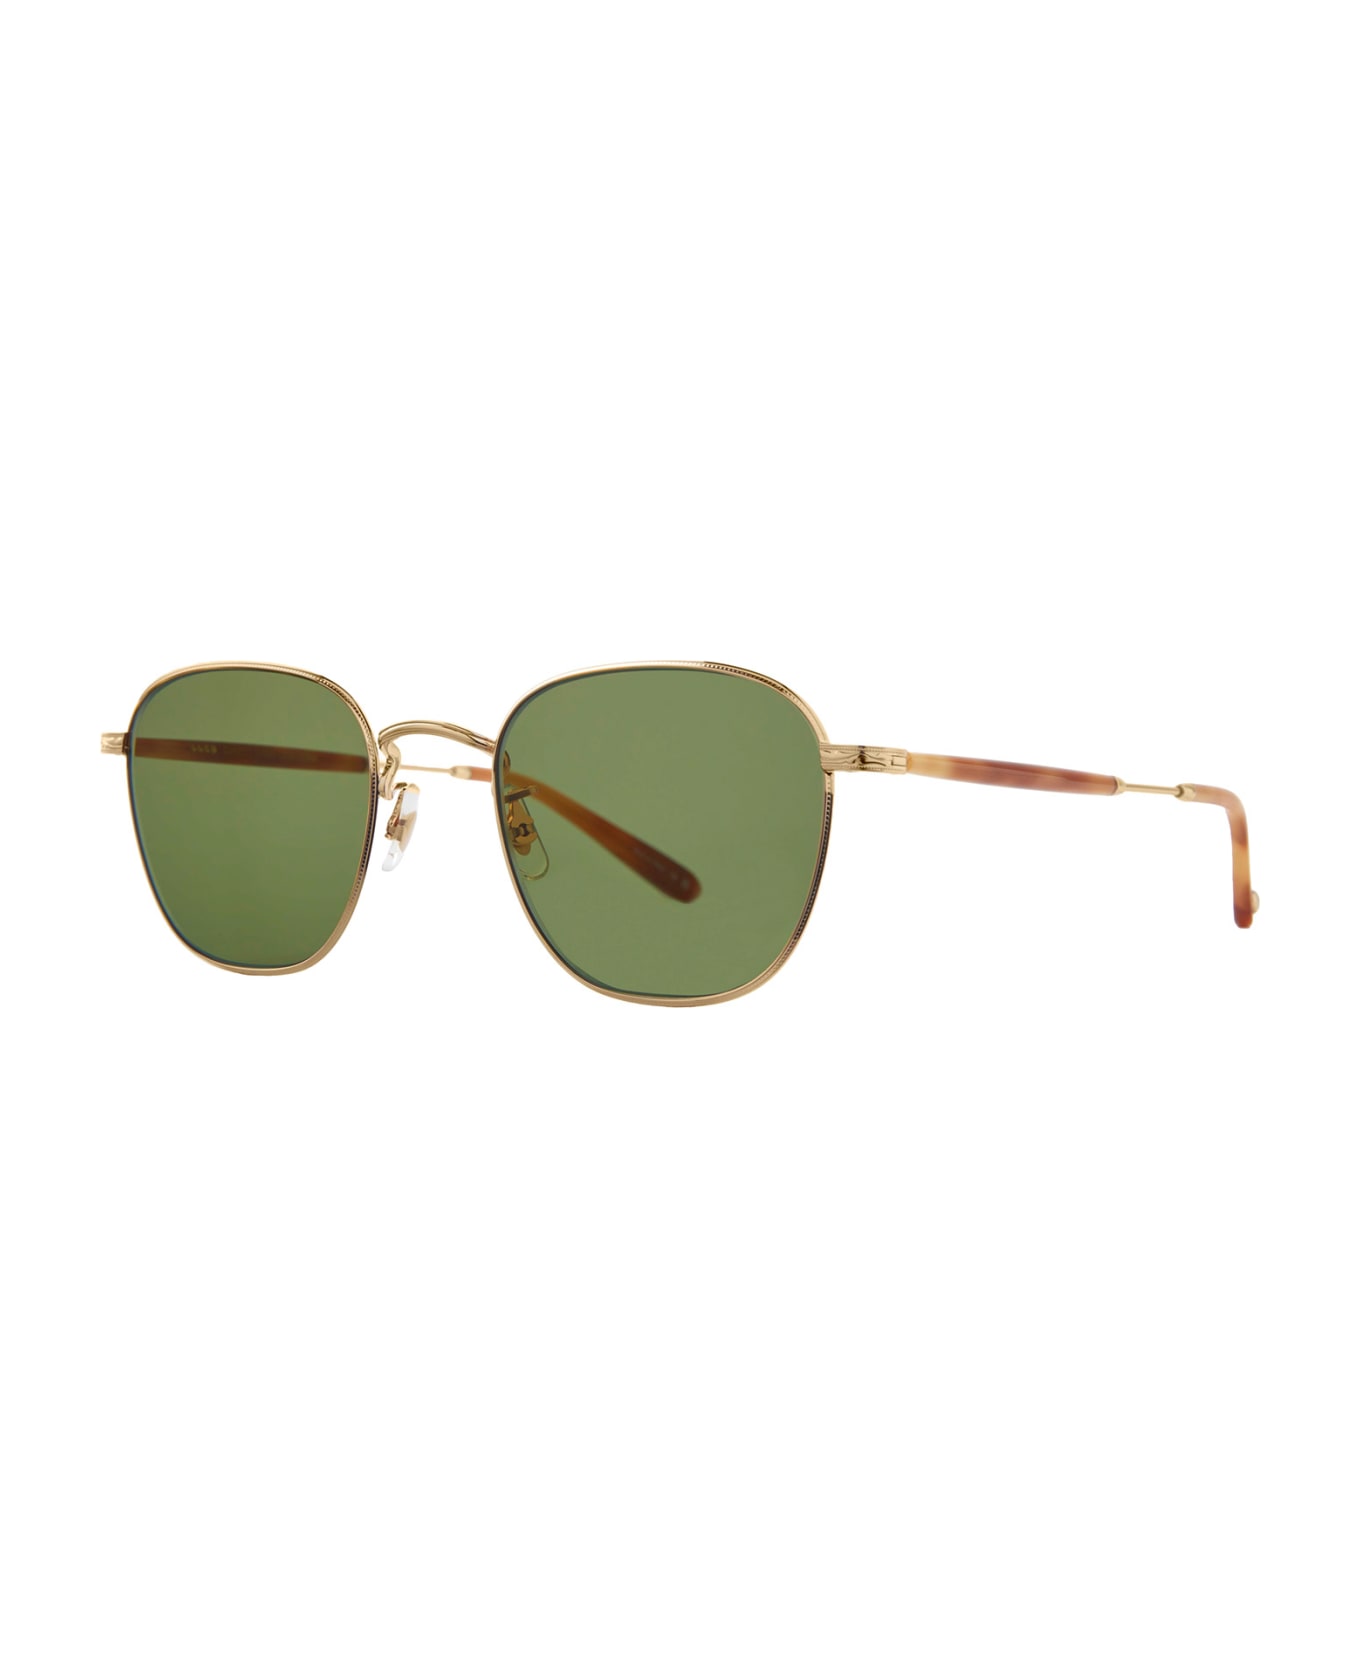 Garrett Leight World Sun Gold-ember Tortoise/semi-flat Green Sunglasses - Gold-Ember Tortoise/Semi-Flat Green サングラス